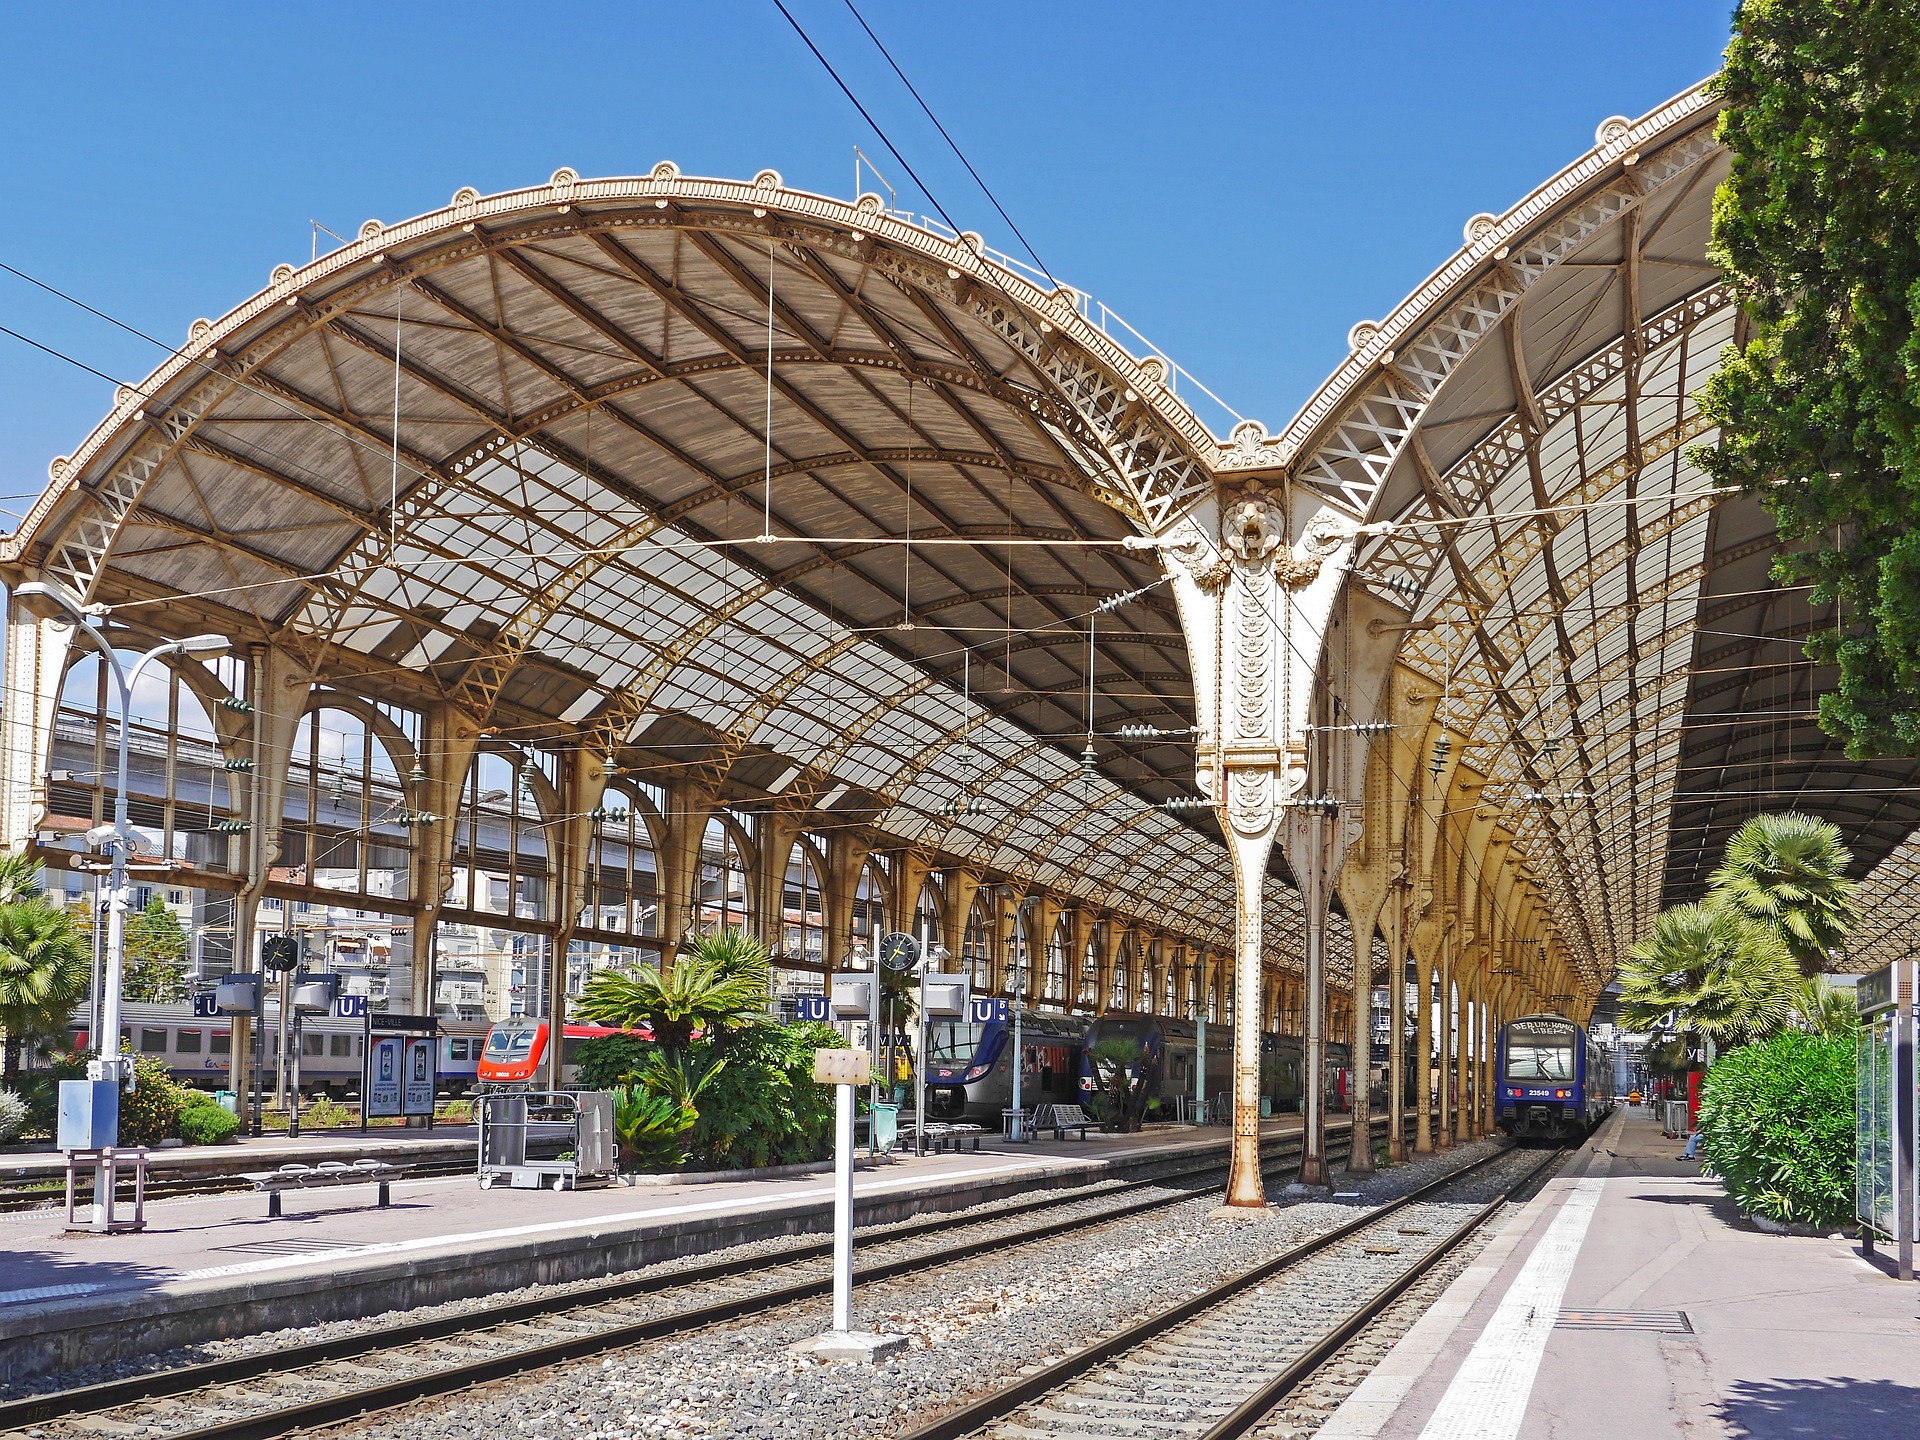 Station Counsilgrade  Frankreich 